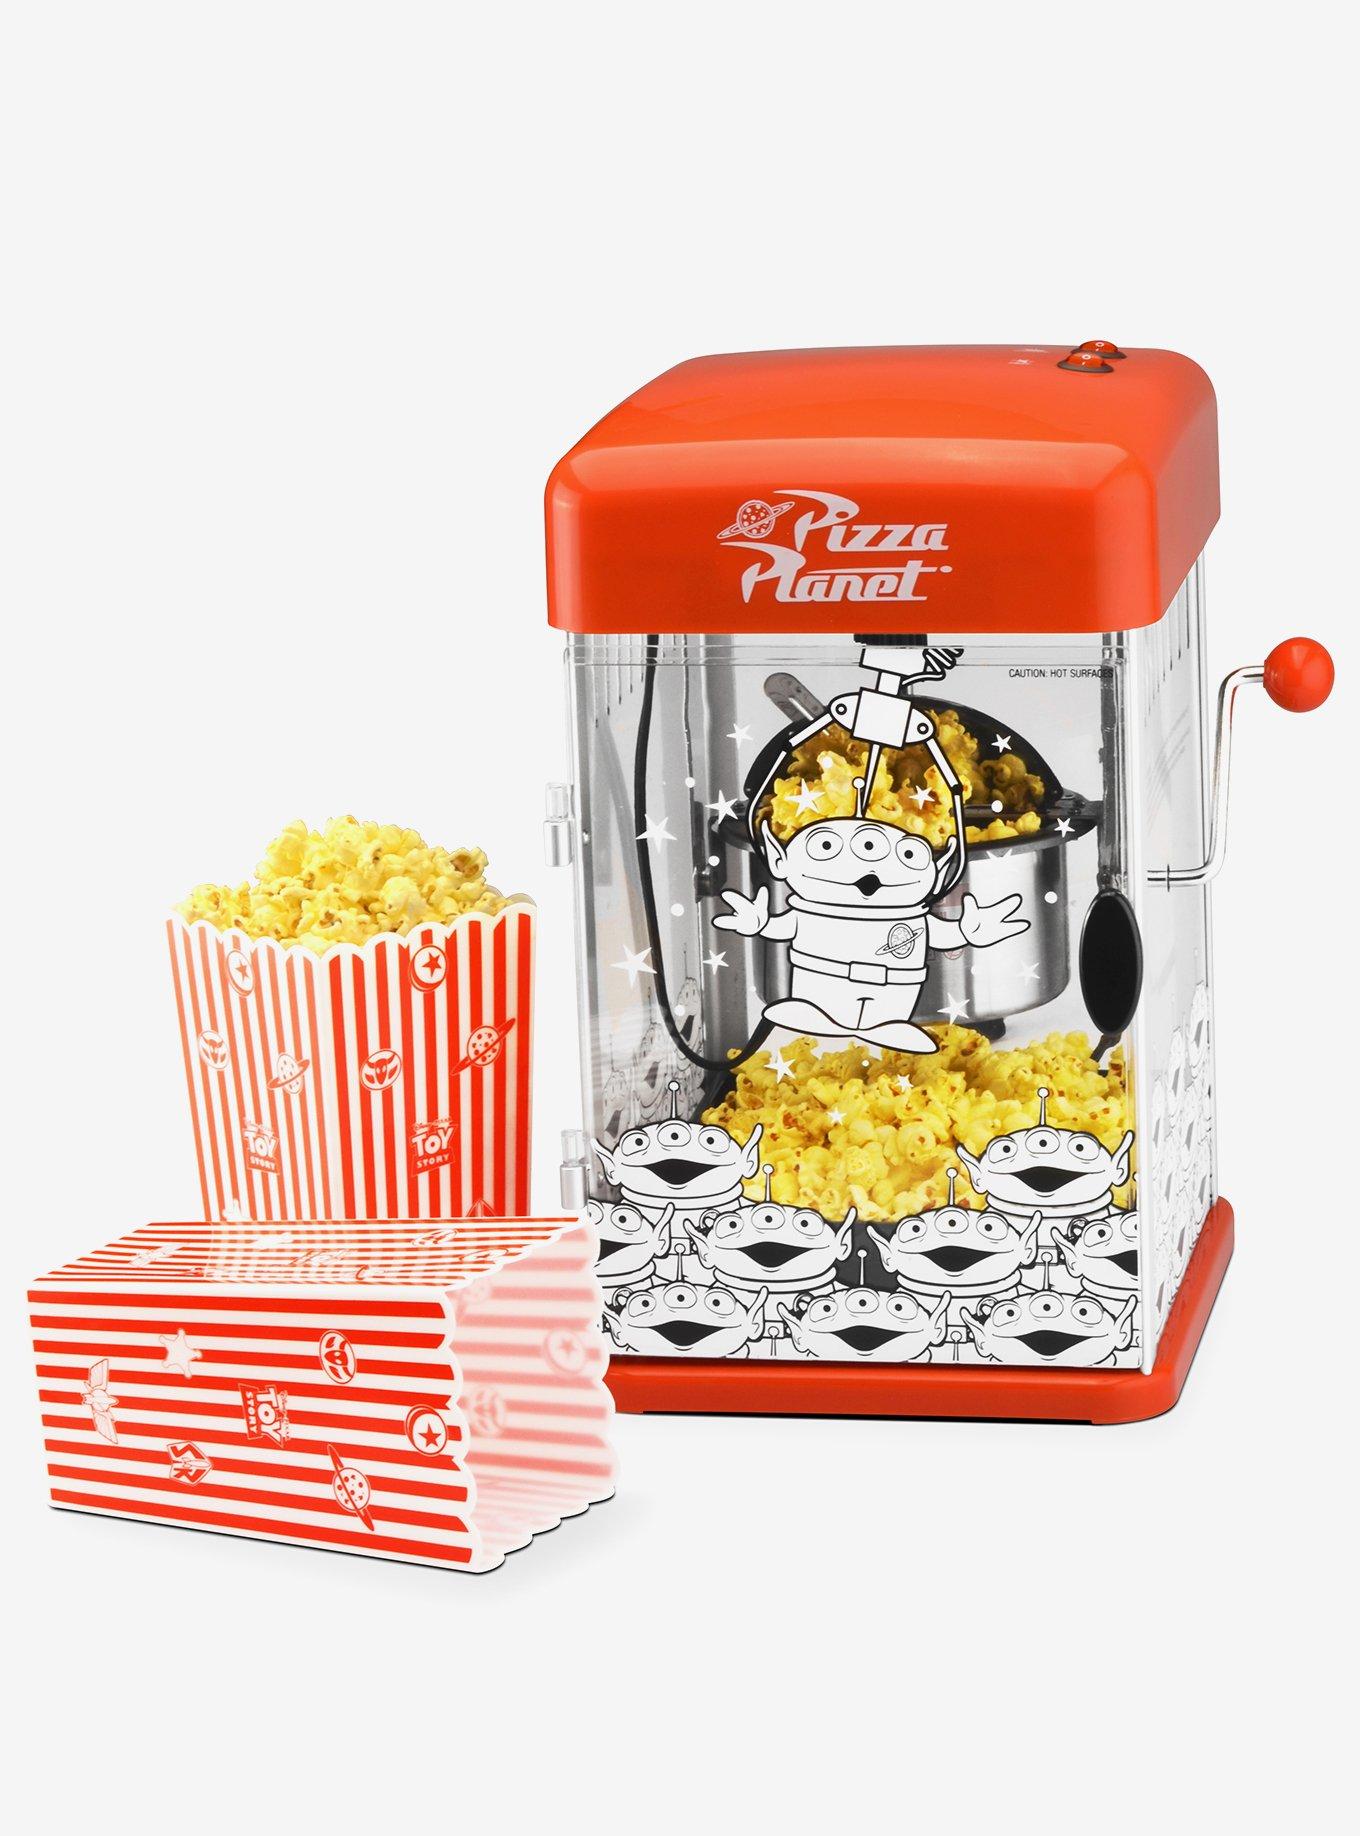 Beautiful Kitchen Appliances Hot Air Popcorn Maker,Black Sesame New